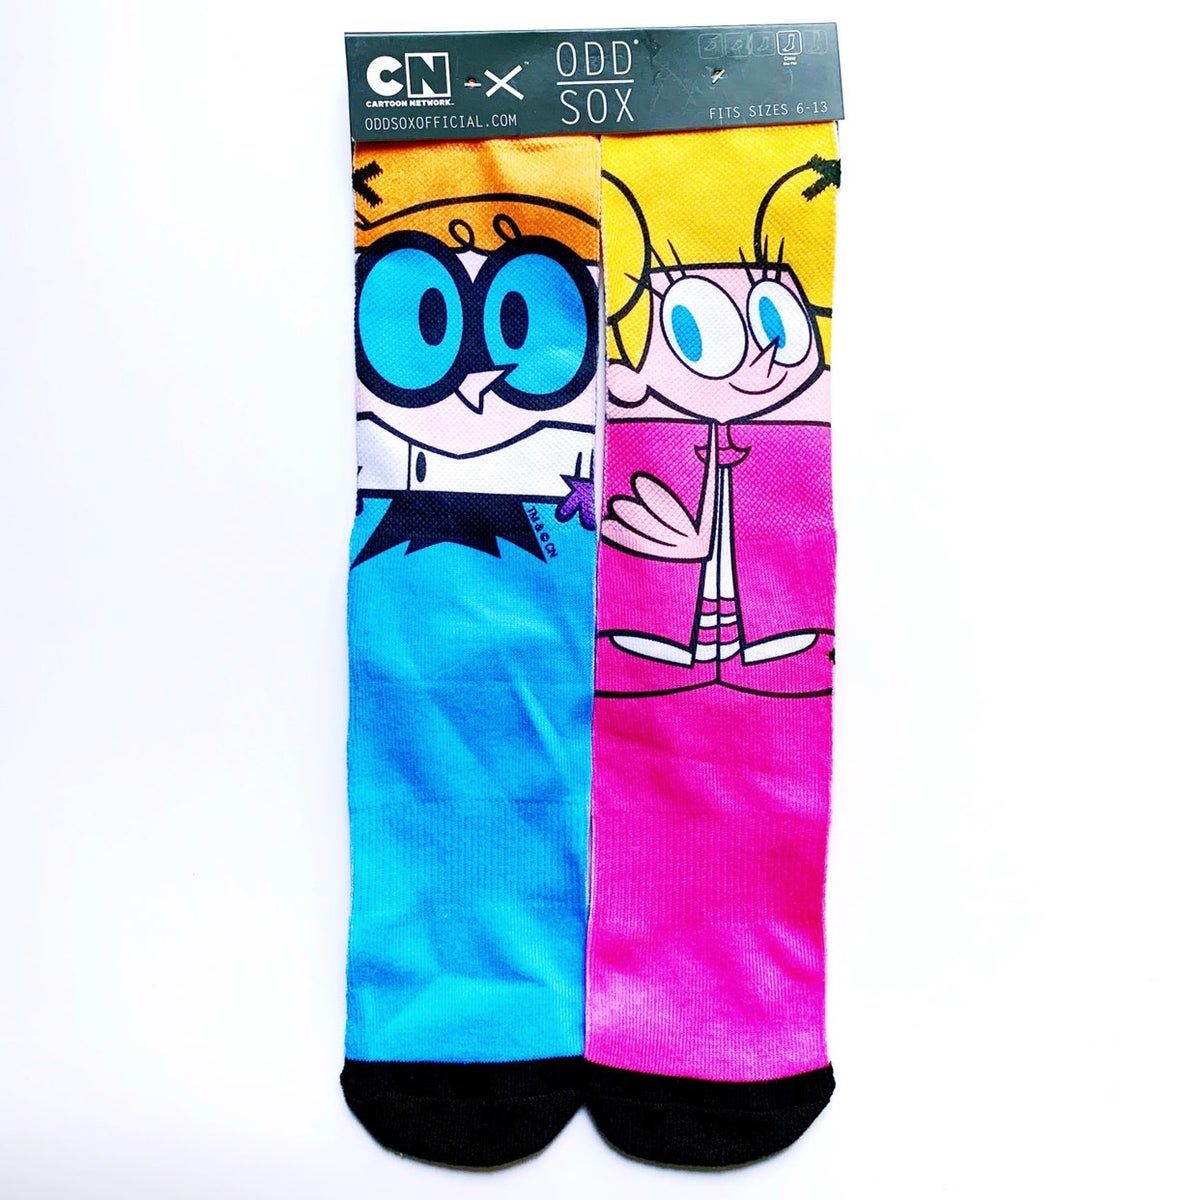 Cartoon Network Dexters Laboratory Socks On Mercari Dexters